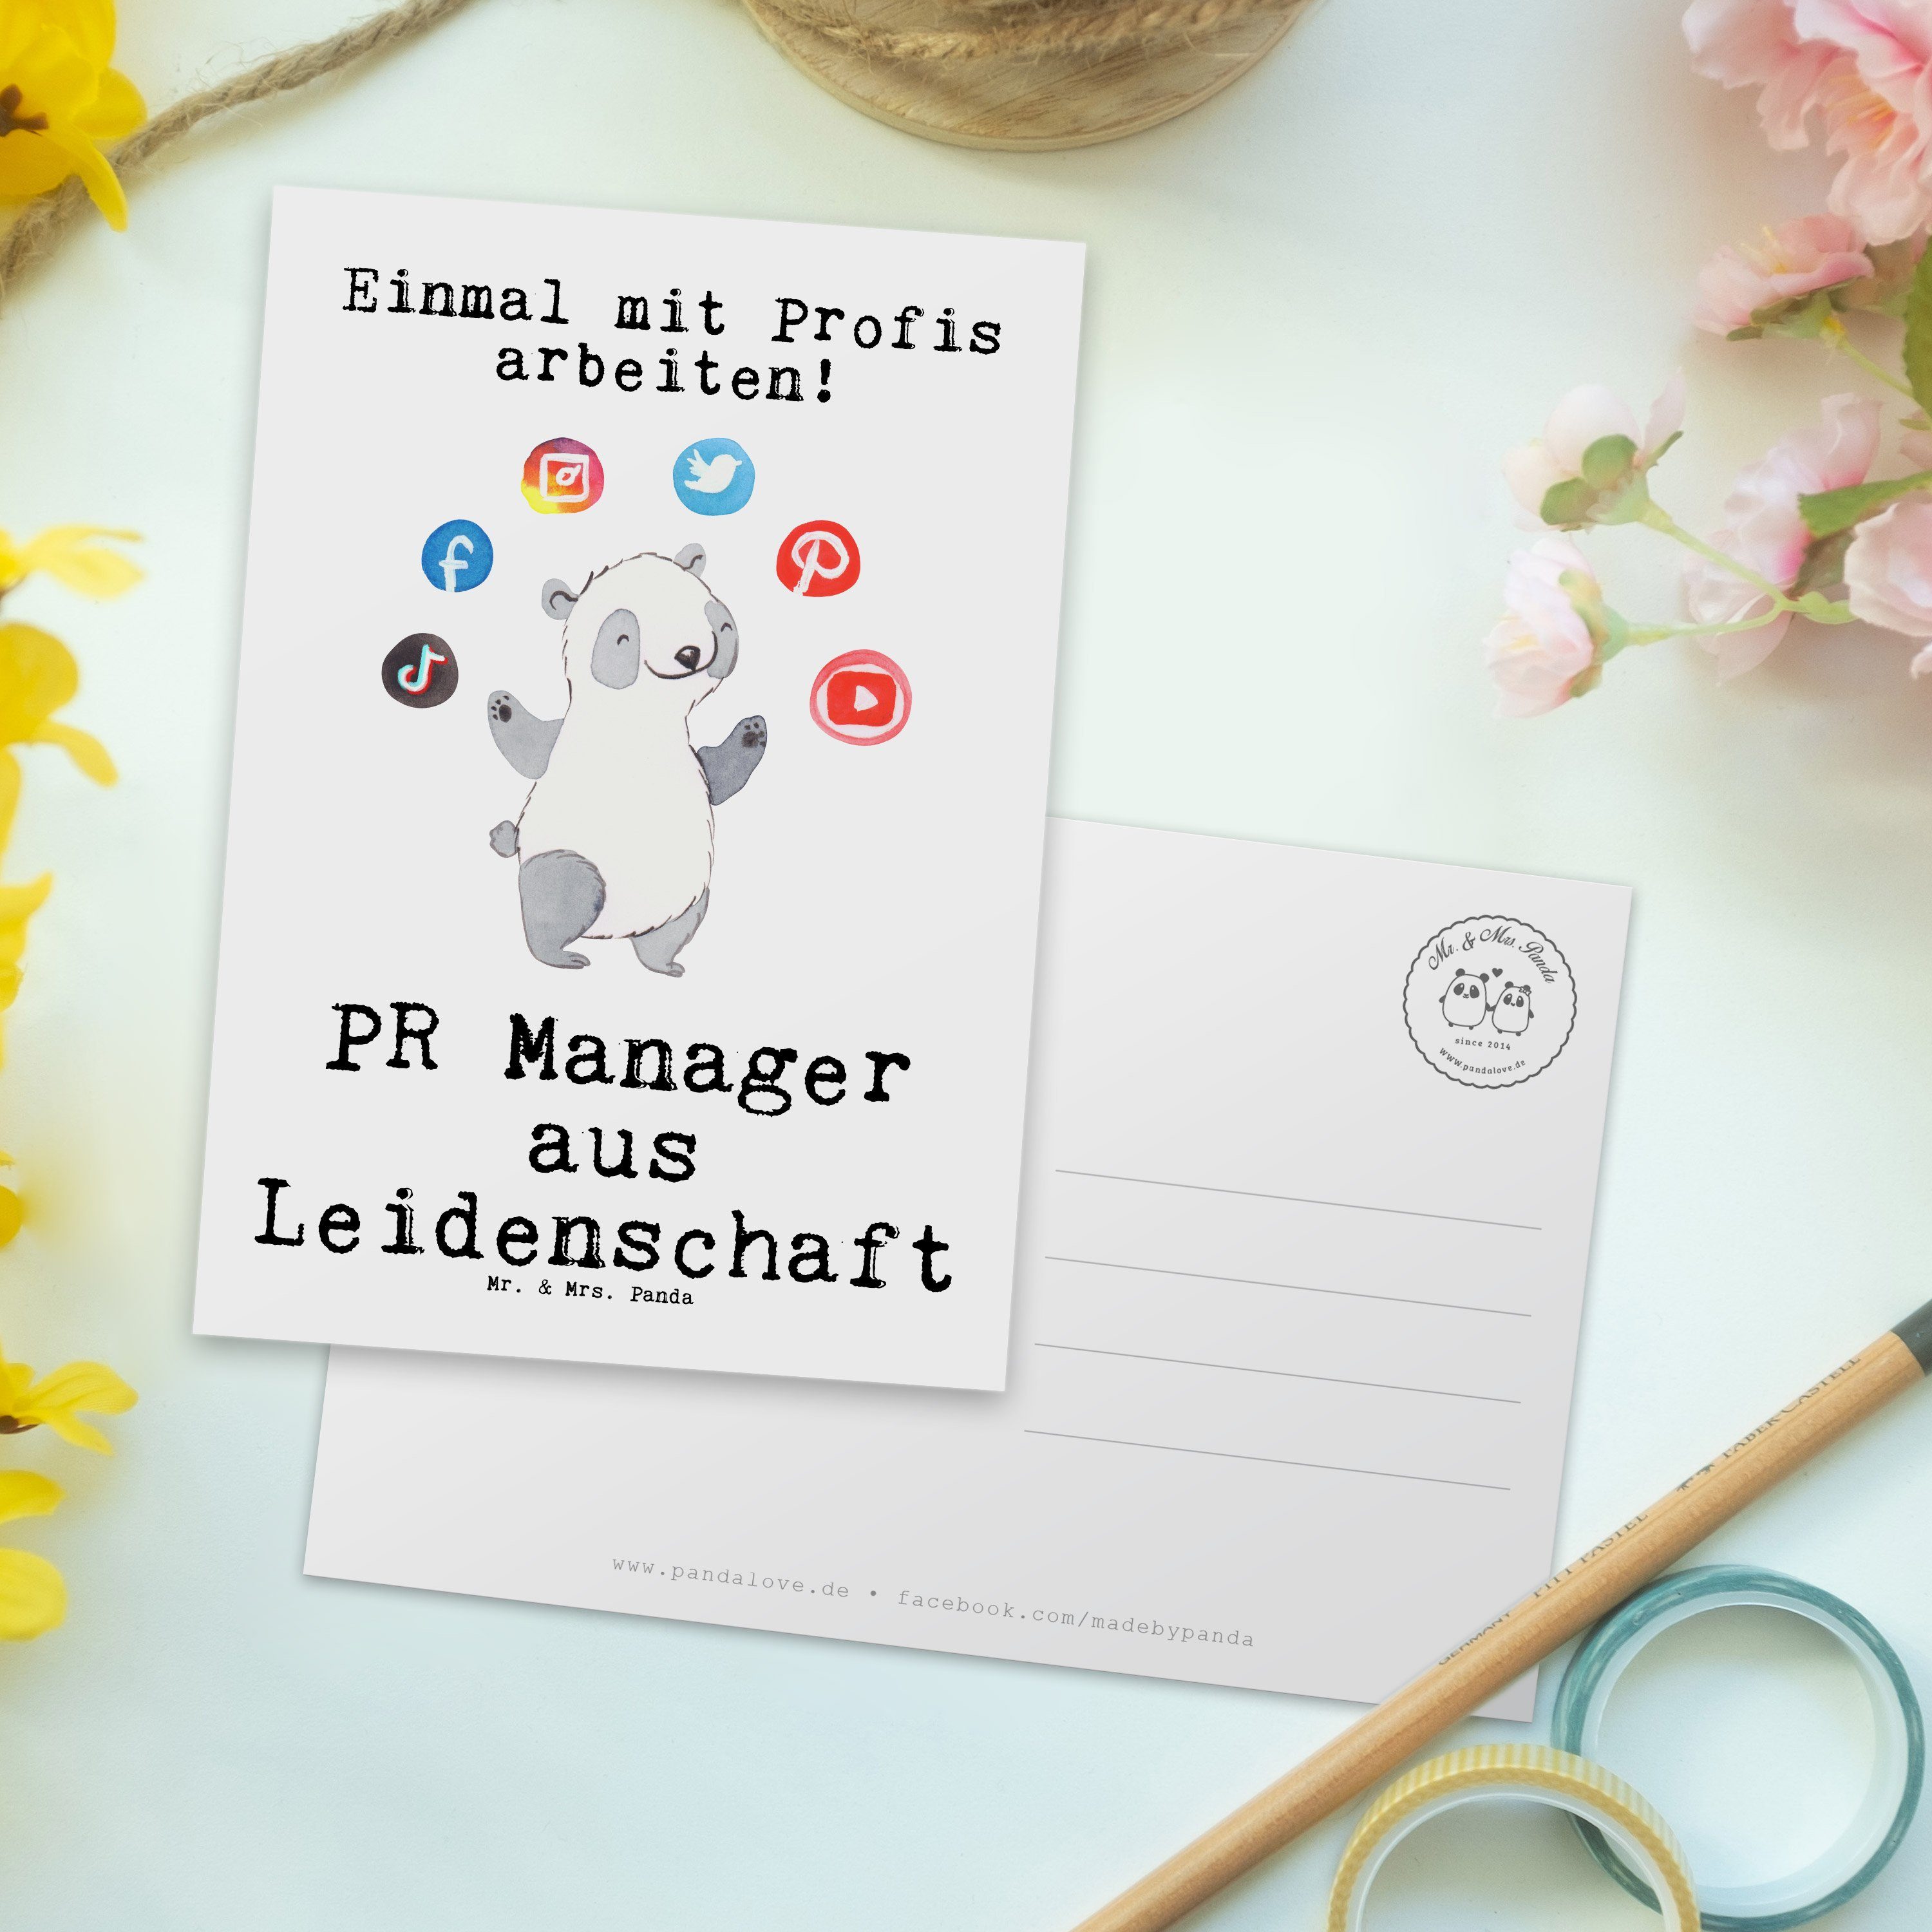 & Geburtstagskarte, - Weiß Postkarte PR - Mr. Geschenk, Manager Gesc Leidenschaft aus Mrs. Panda